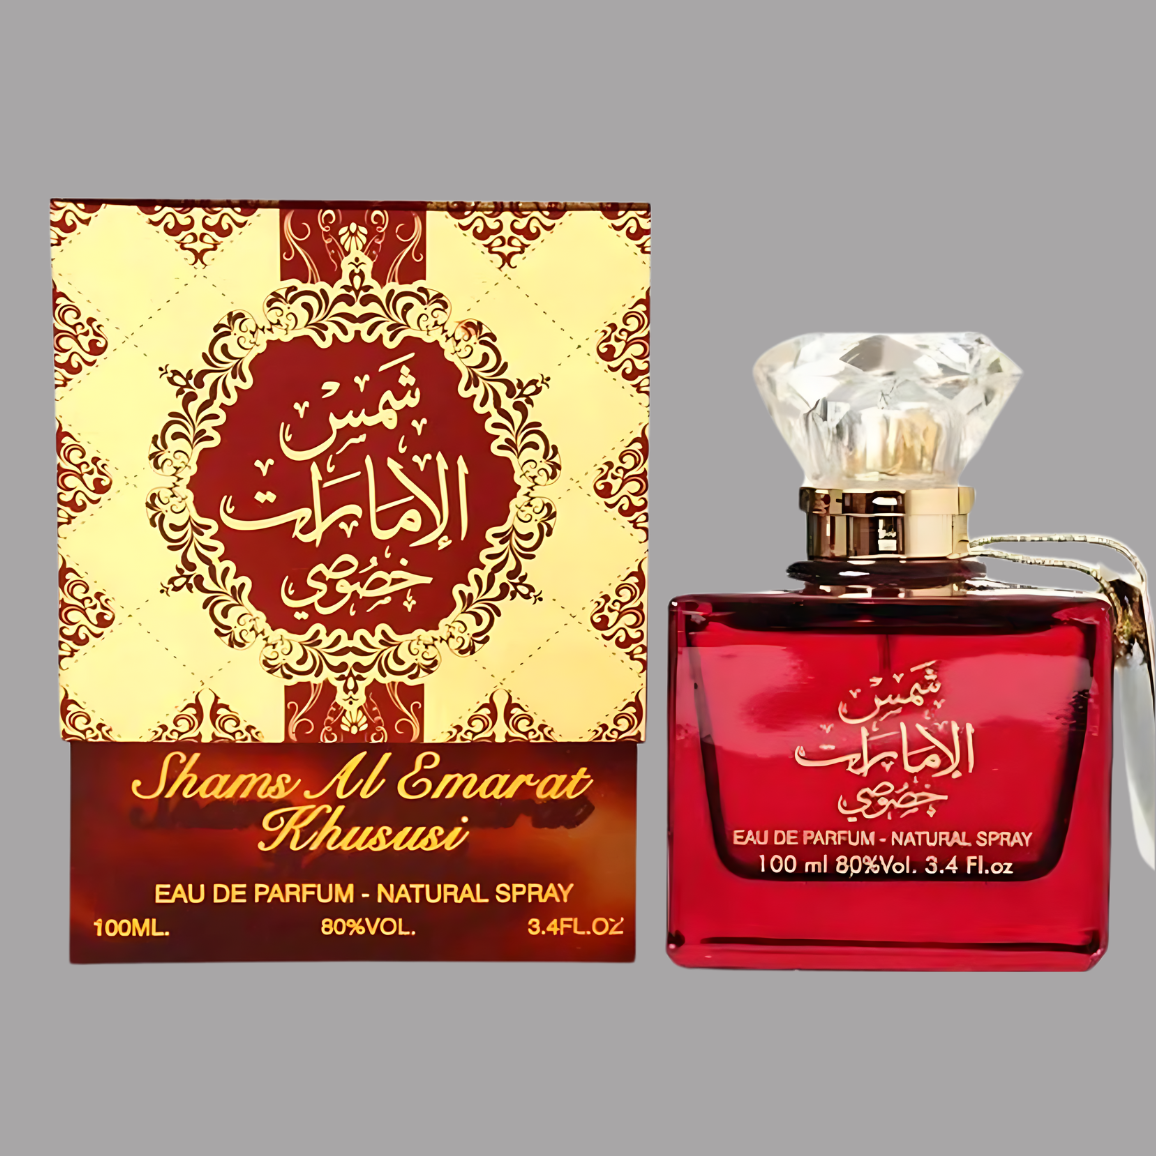 Shams Al Emarat Khususi with Deo 100ml Eau de Parfum Ard Al Zaafaran